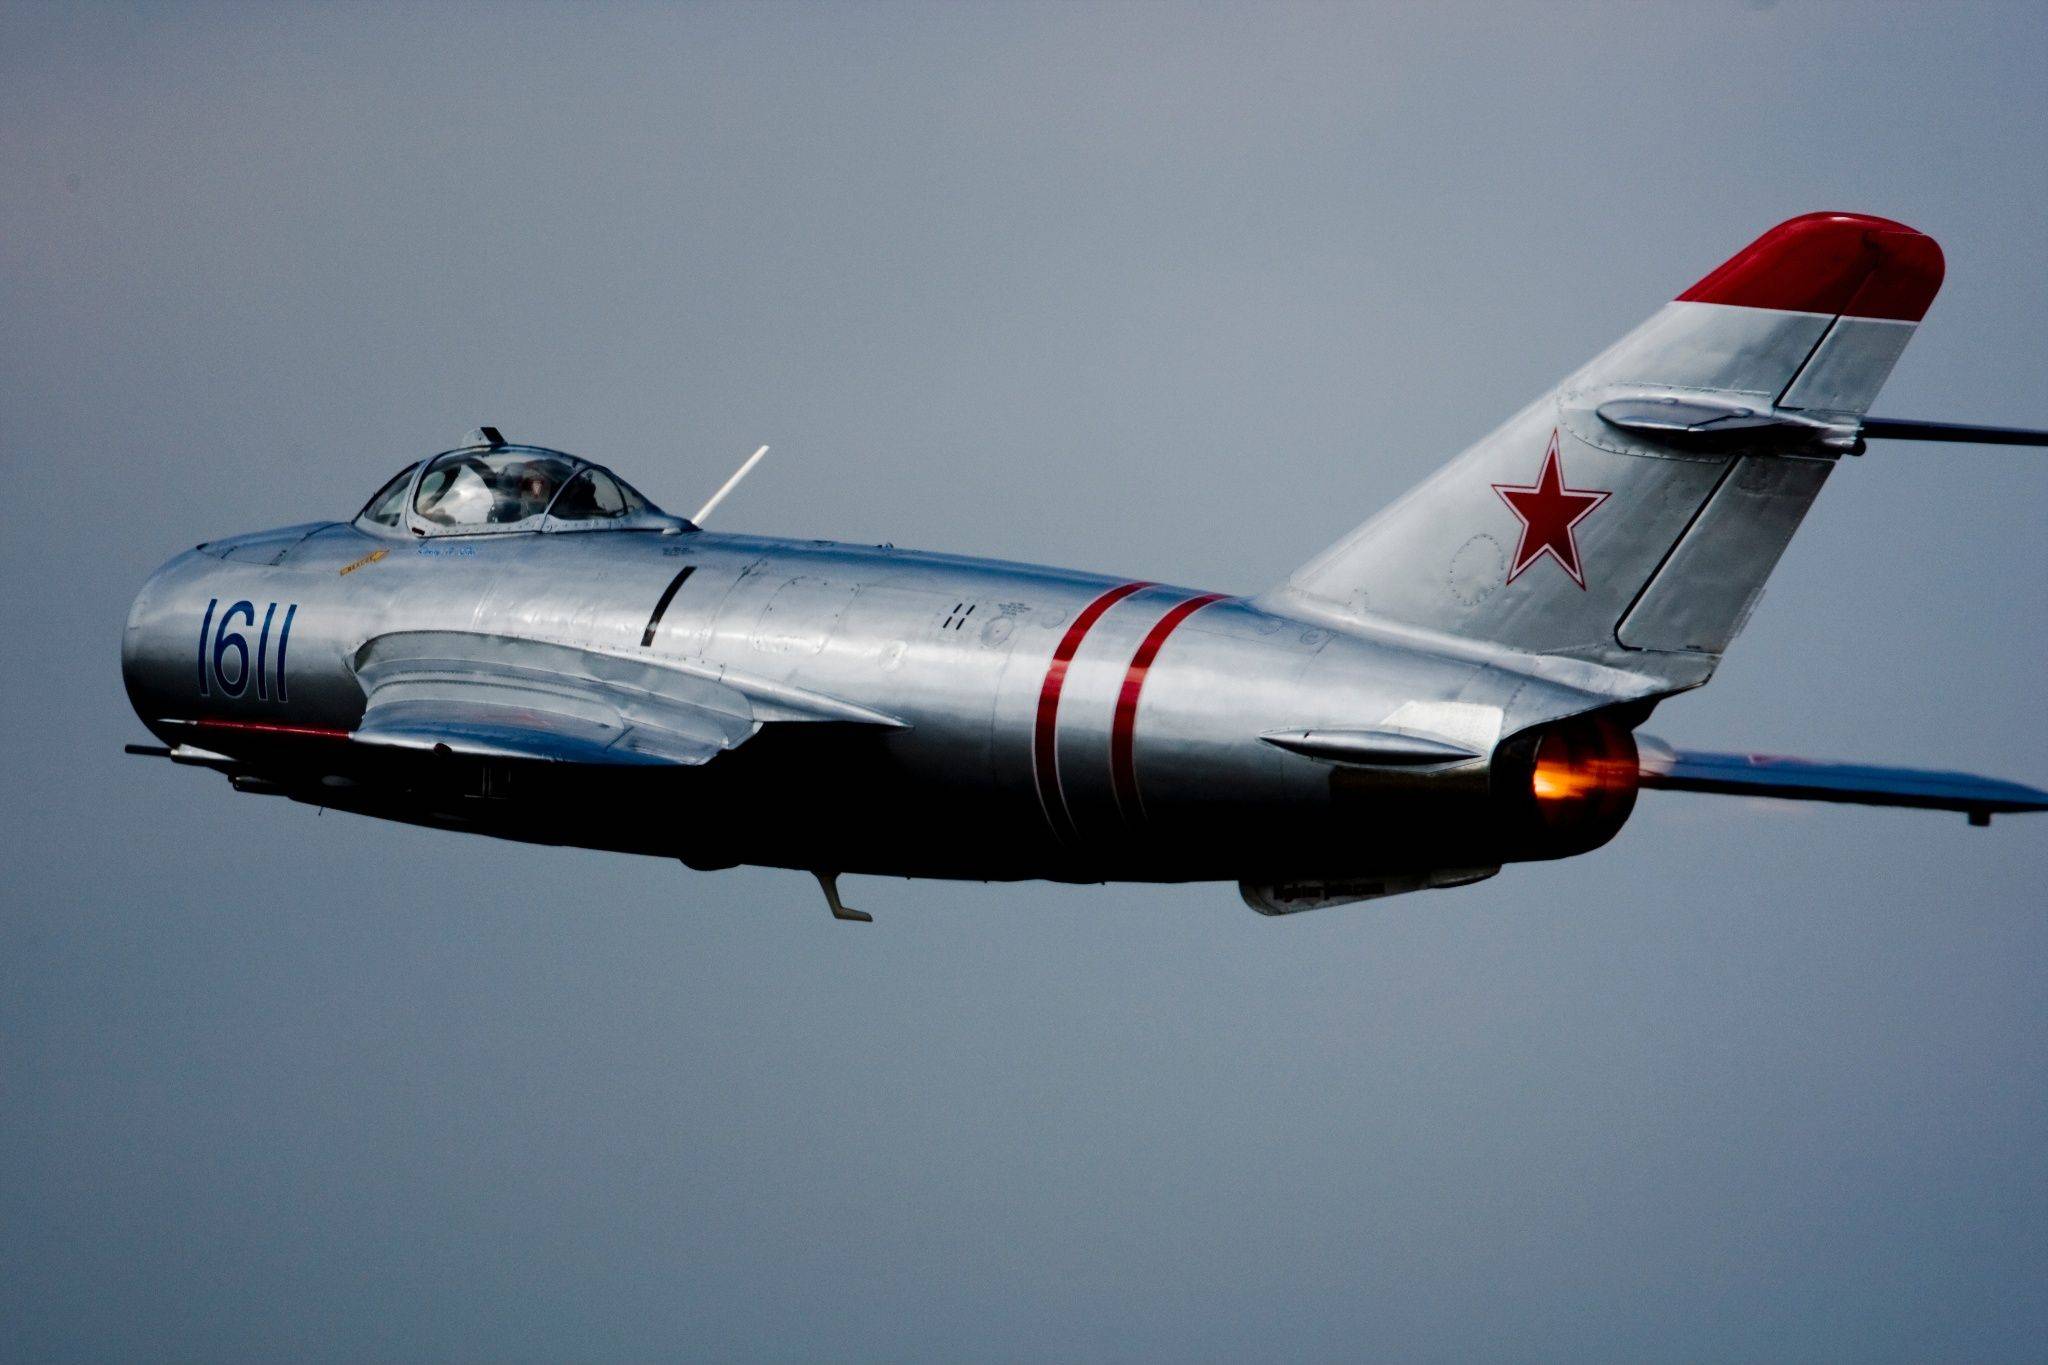 Russian aces of the korean war - mig-15 pilots versus usaf f-86s